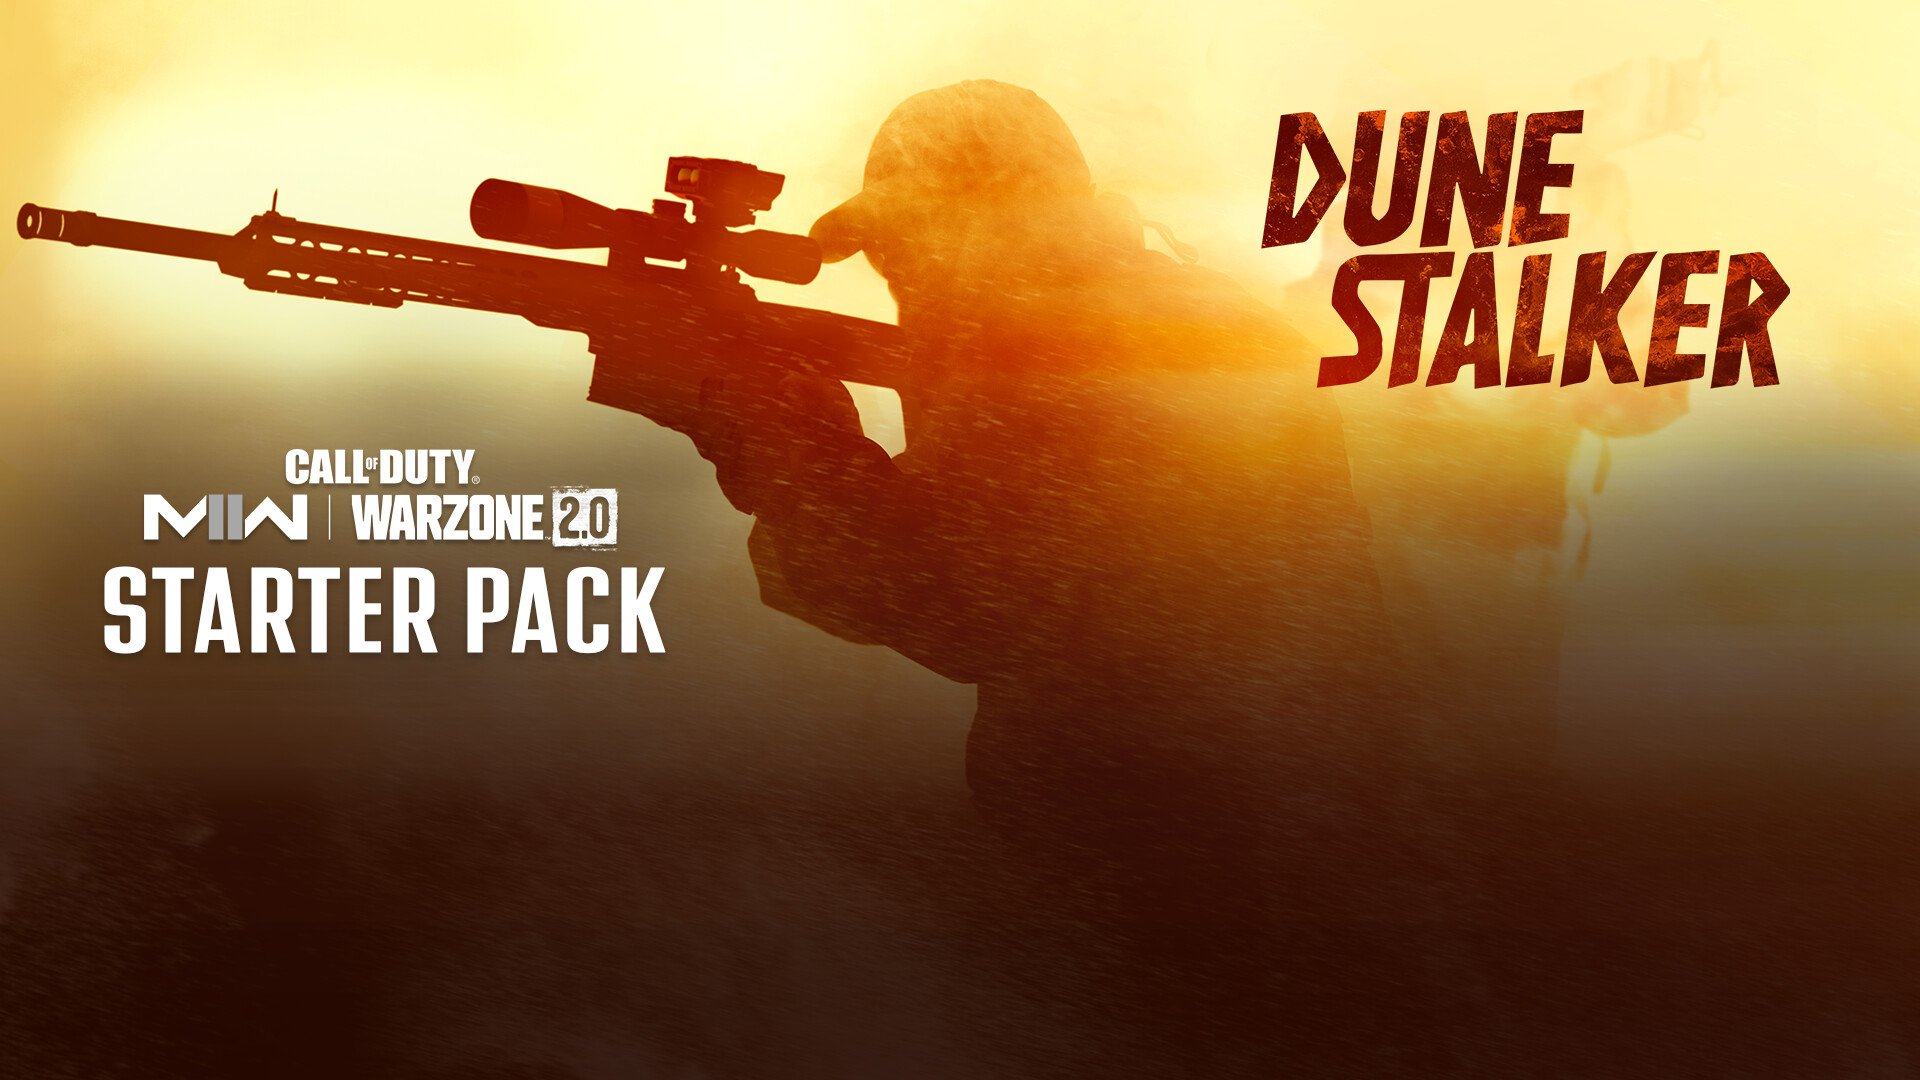 Call of Duty: Modern Warfare II - Dune Stalker: Starter Pack DLC Steam Altergift [USD 13.93]